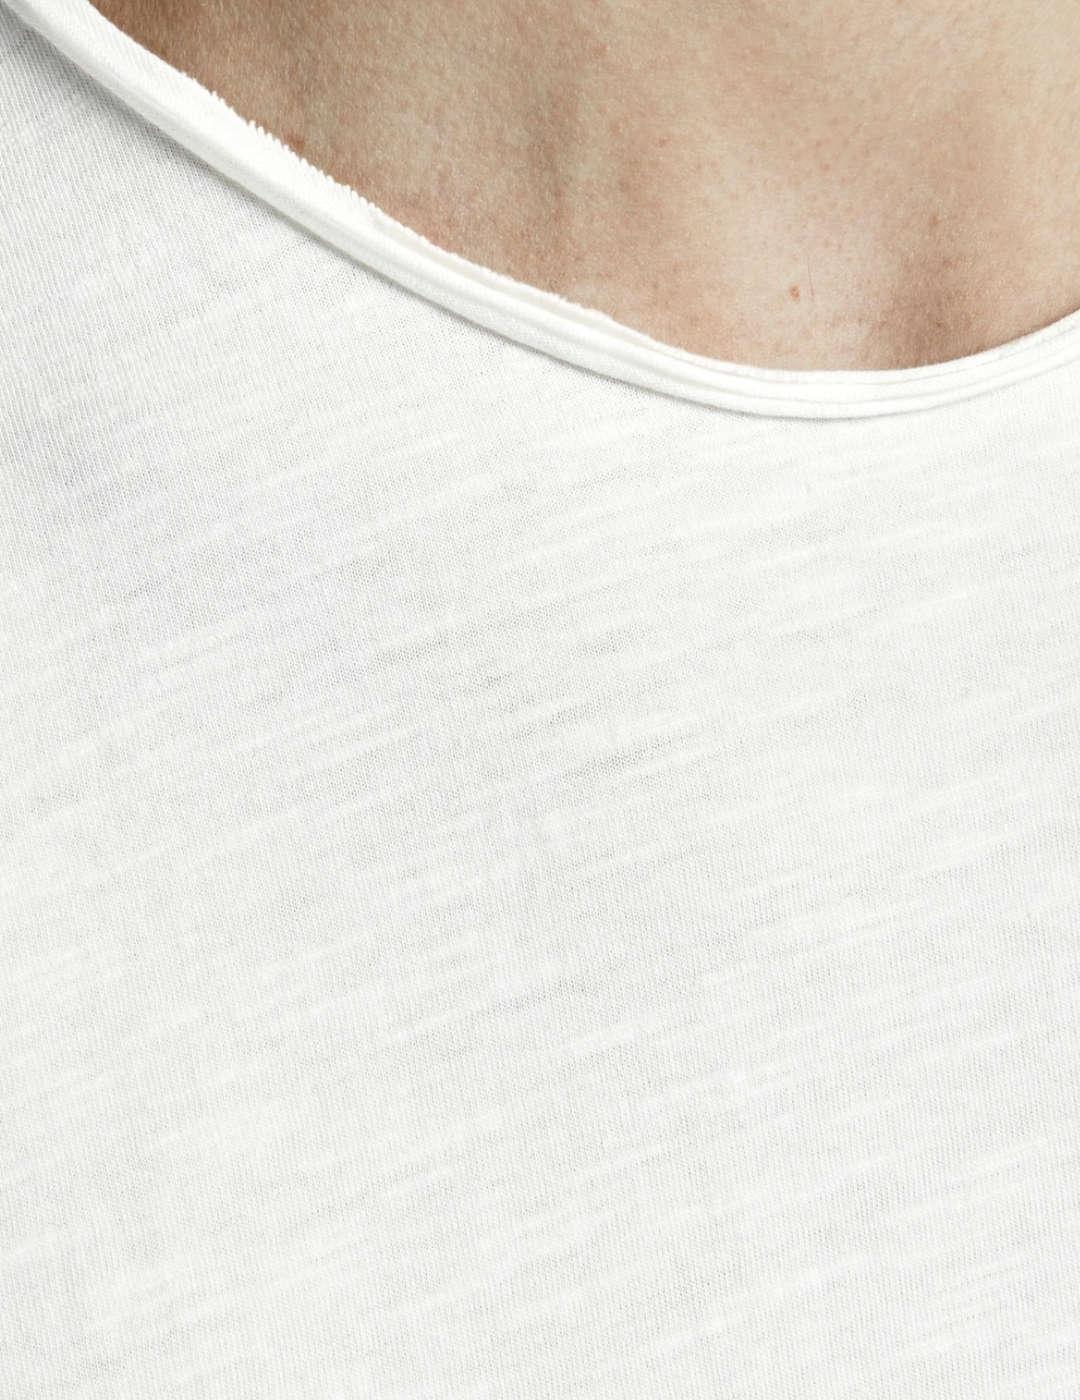 Camiseta Jack&Jones Basher blanca manga corta de hombre